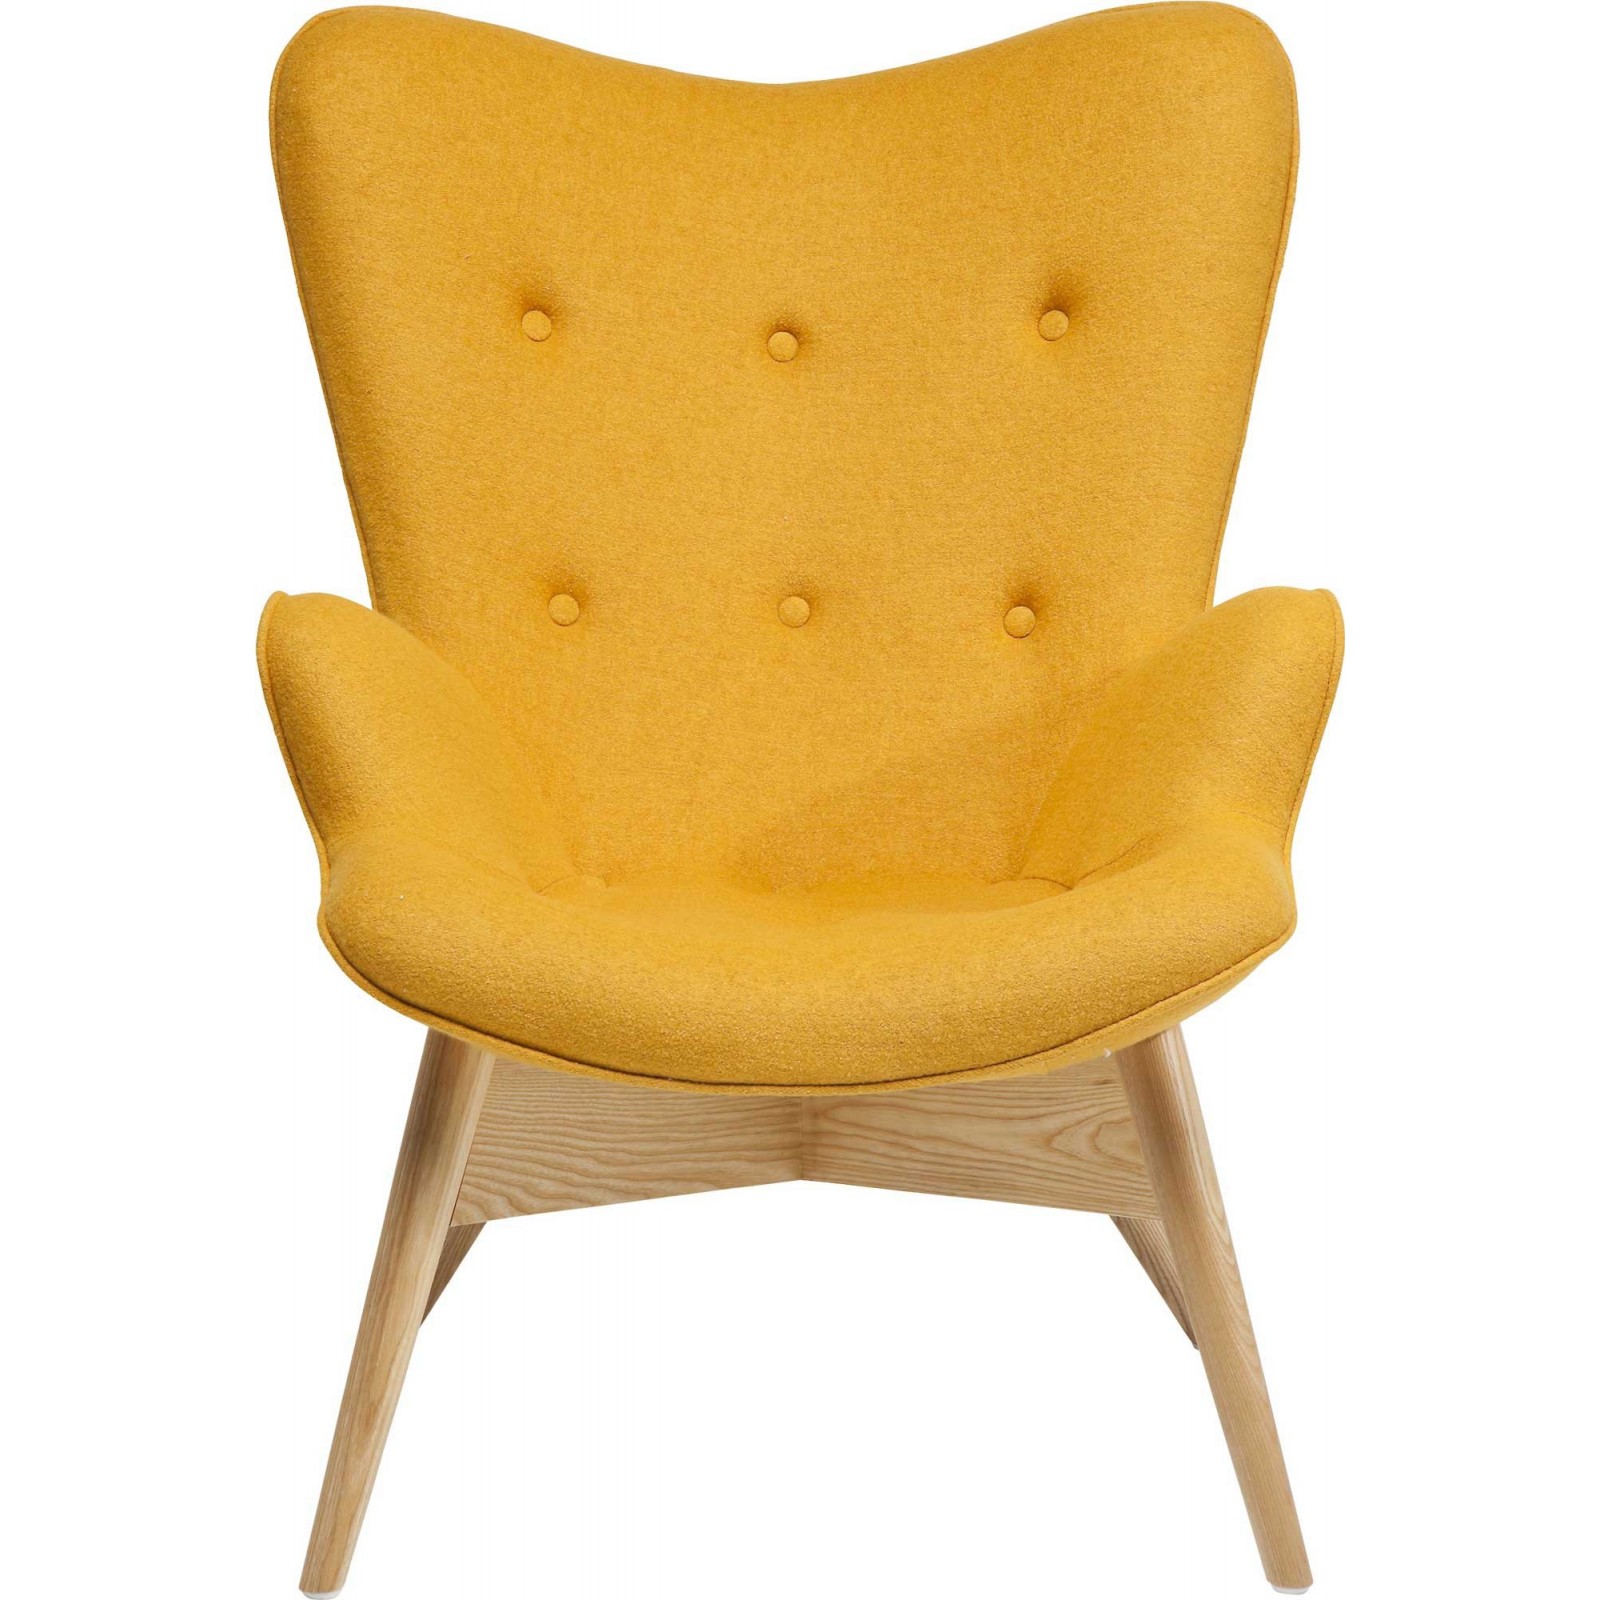 ikea yellow chair